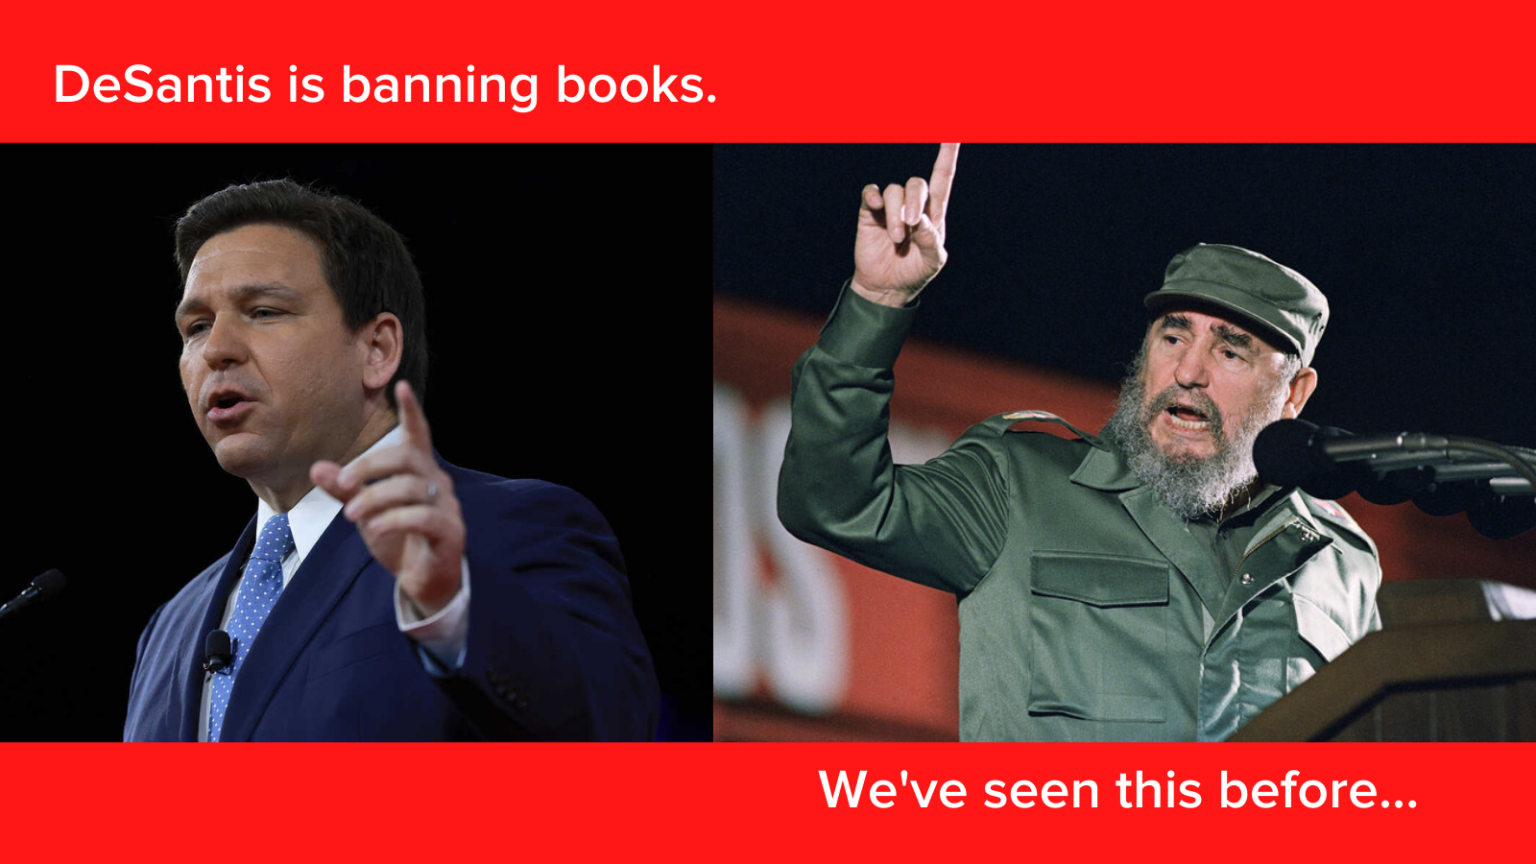 ДеСантис, как и Кастро, запрещает книги